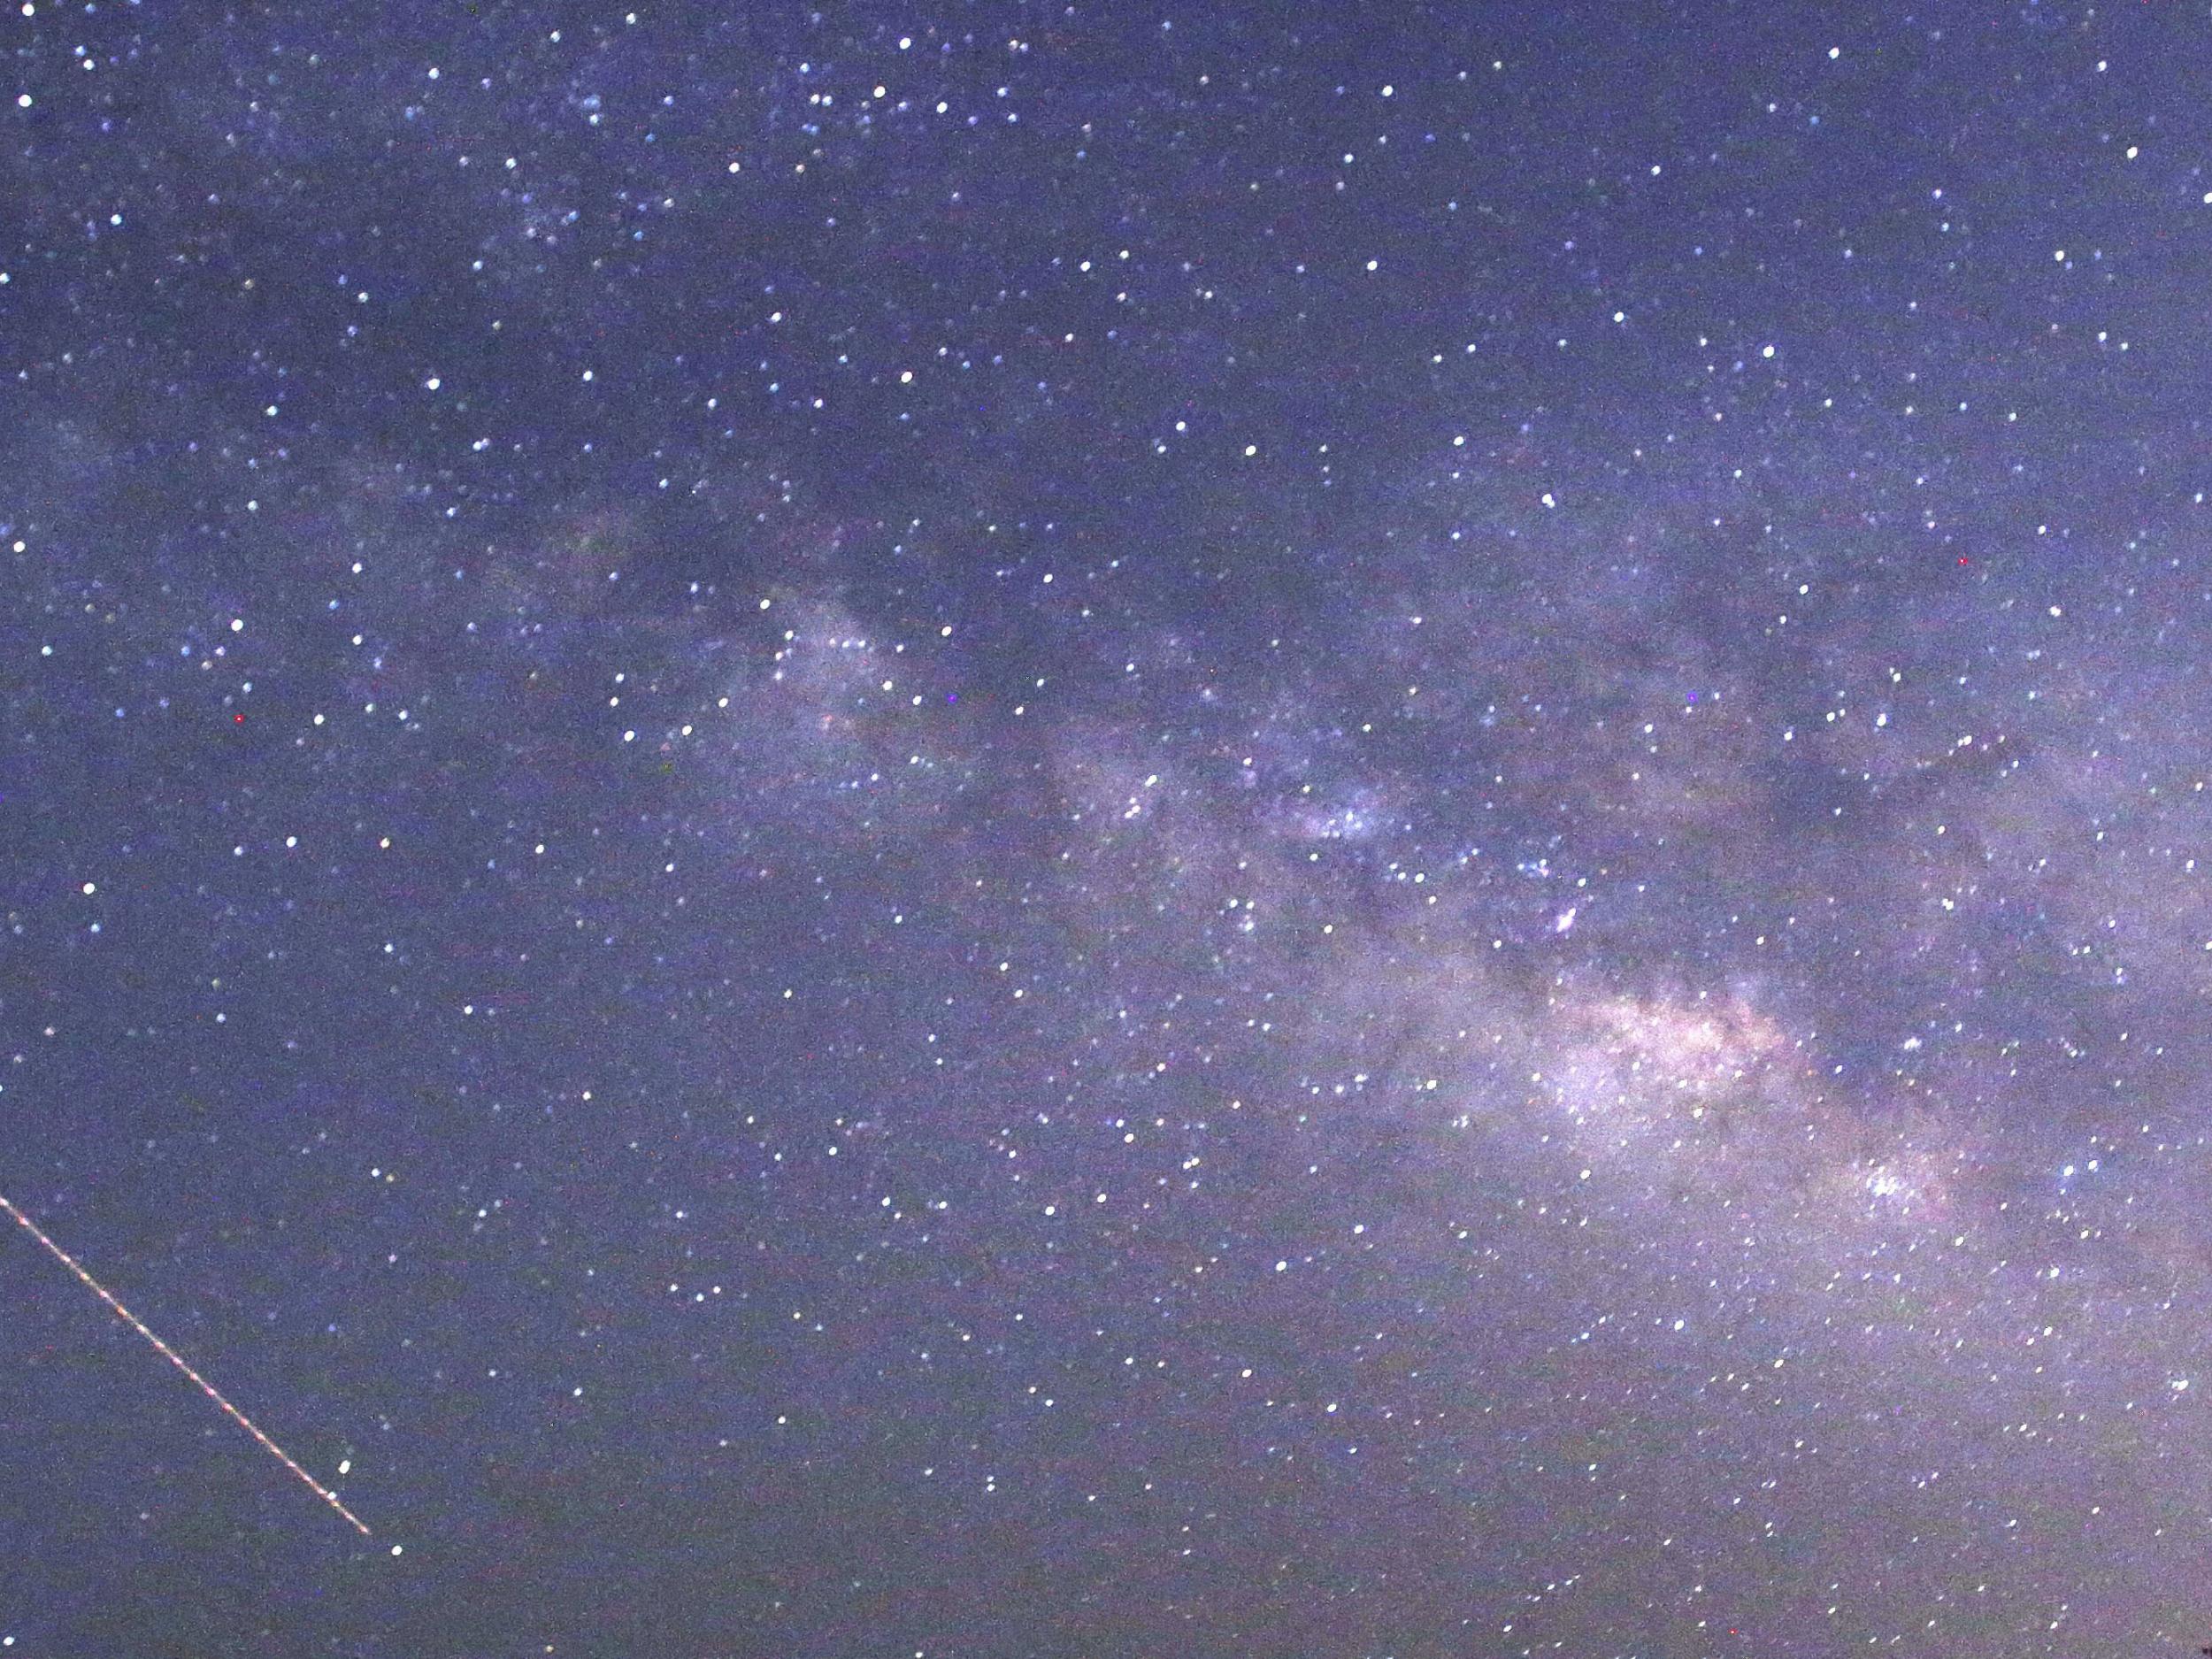 Lyrids meteors passing near the Milky Way